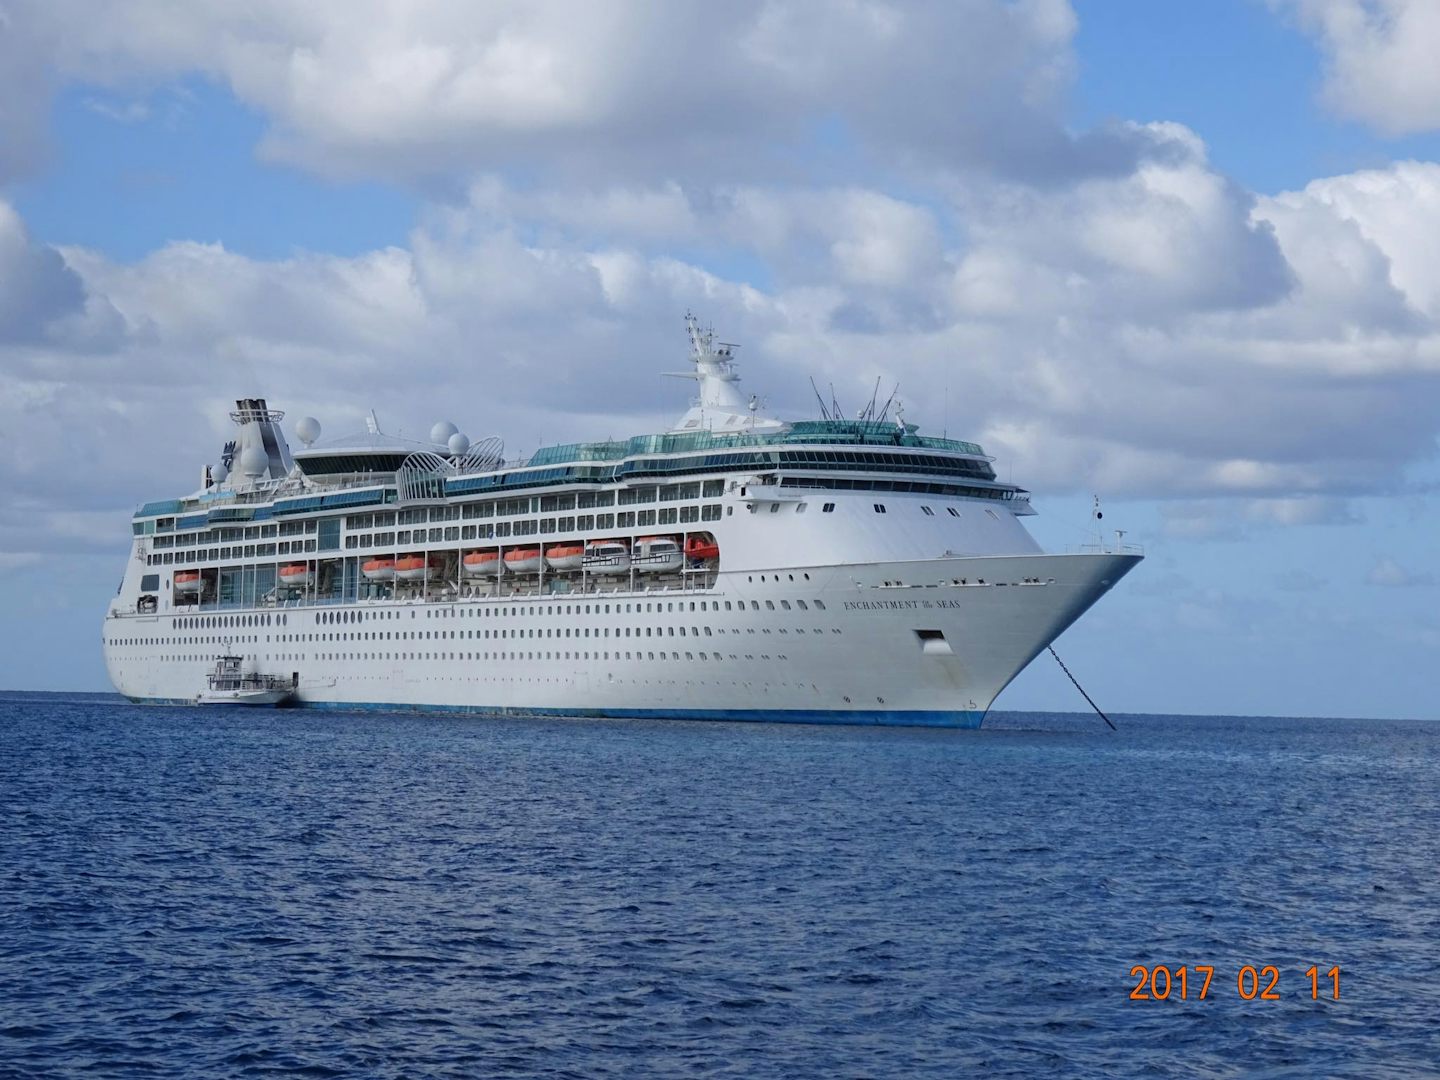 Enchantment of the seas ship - Royal Caribbean